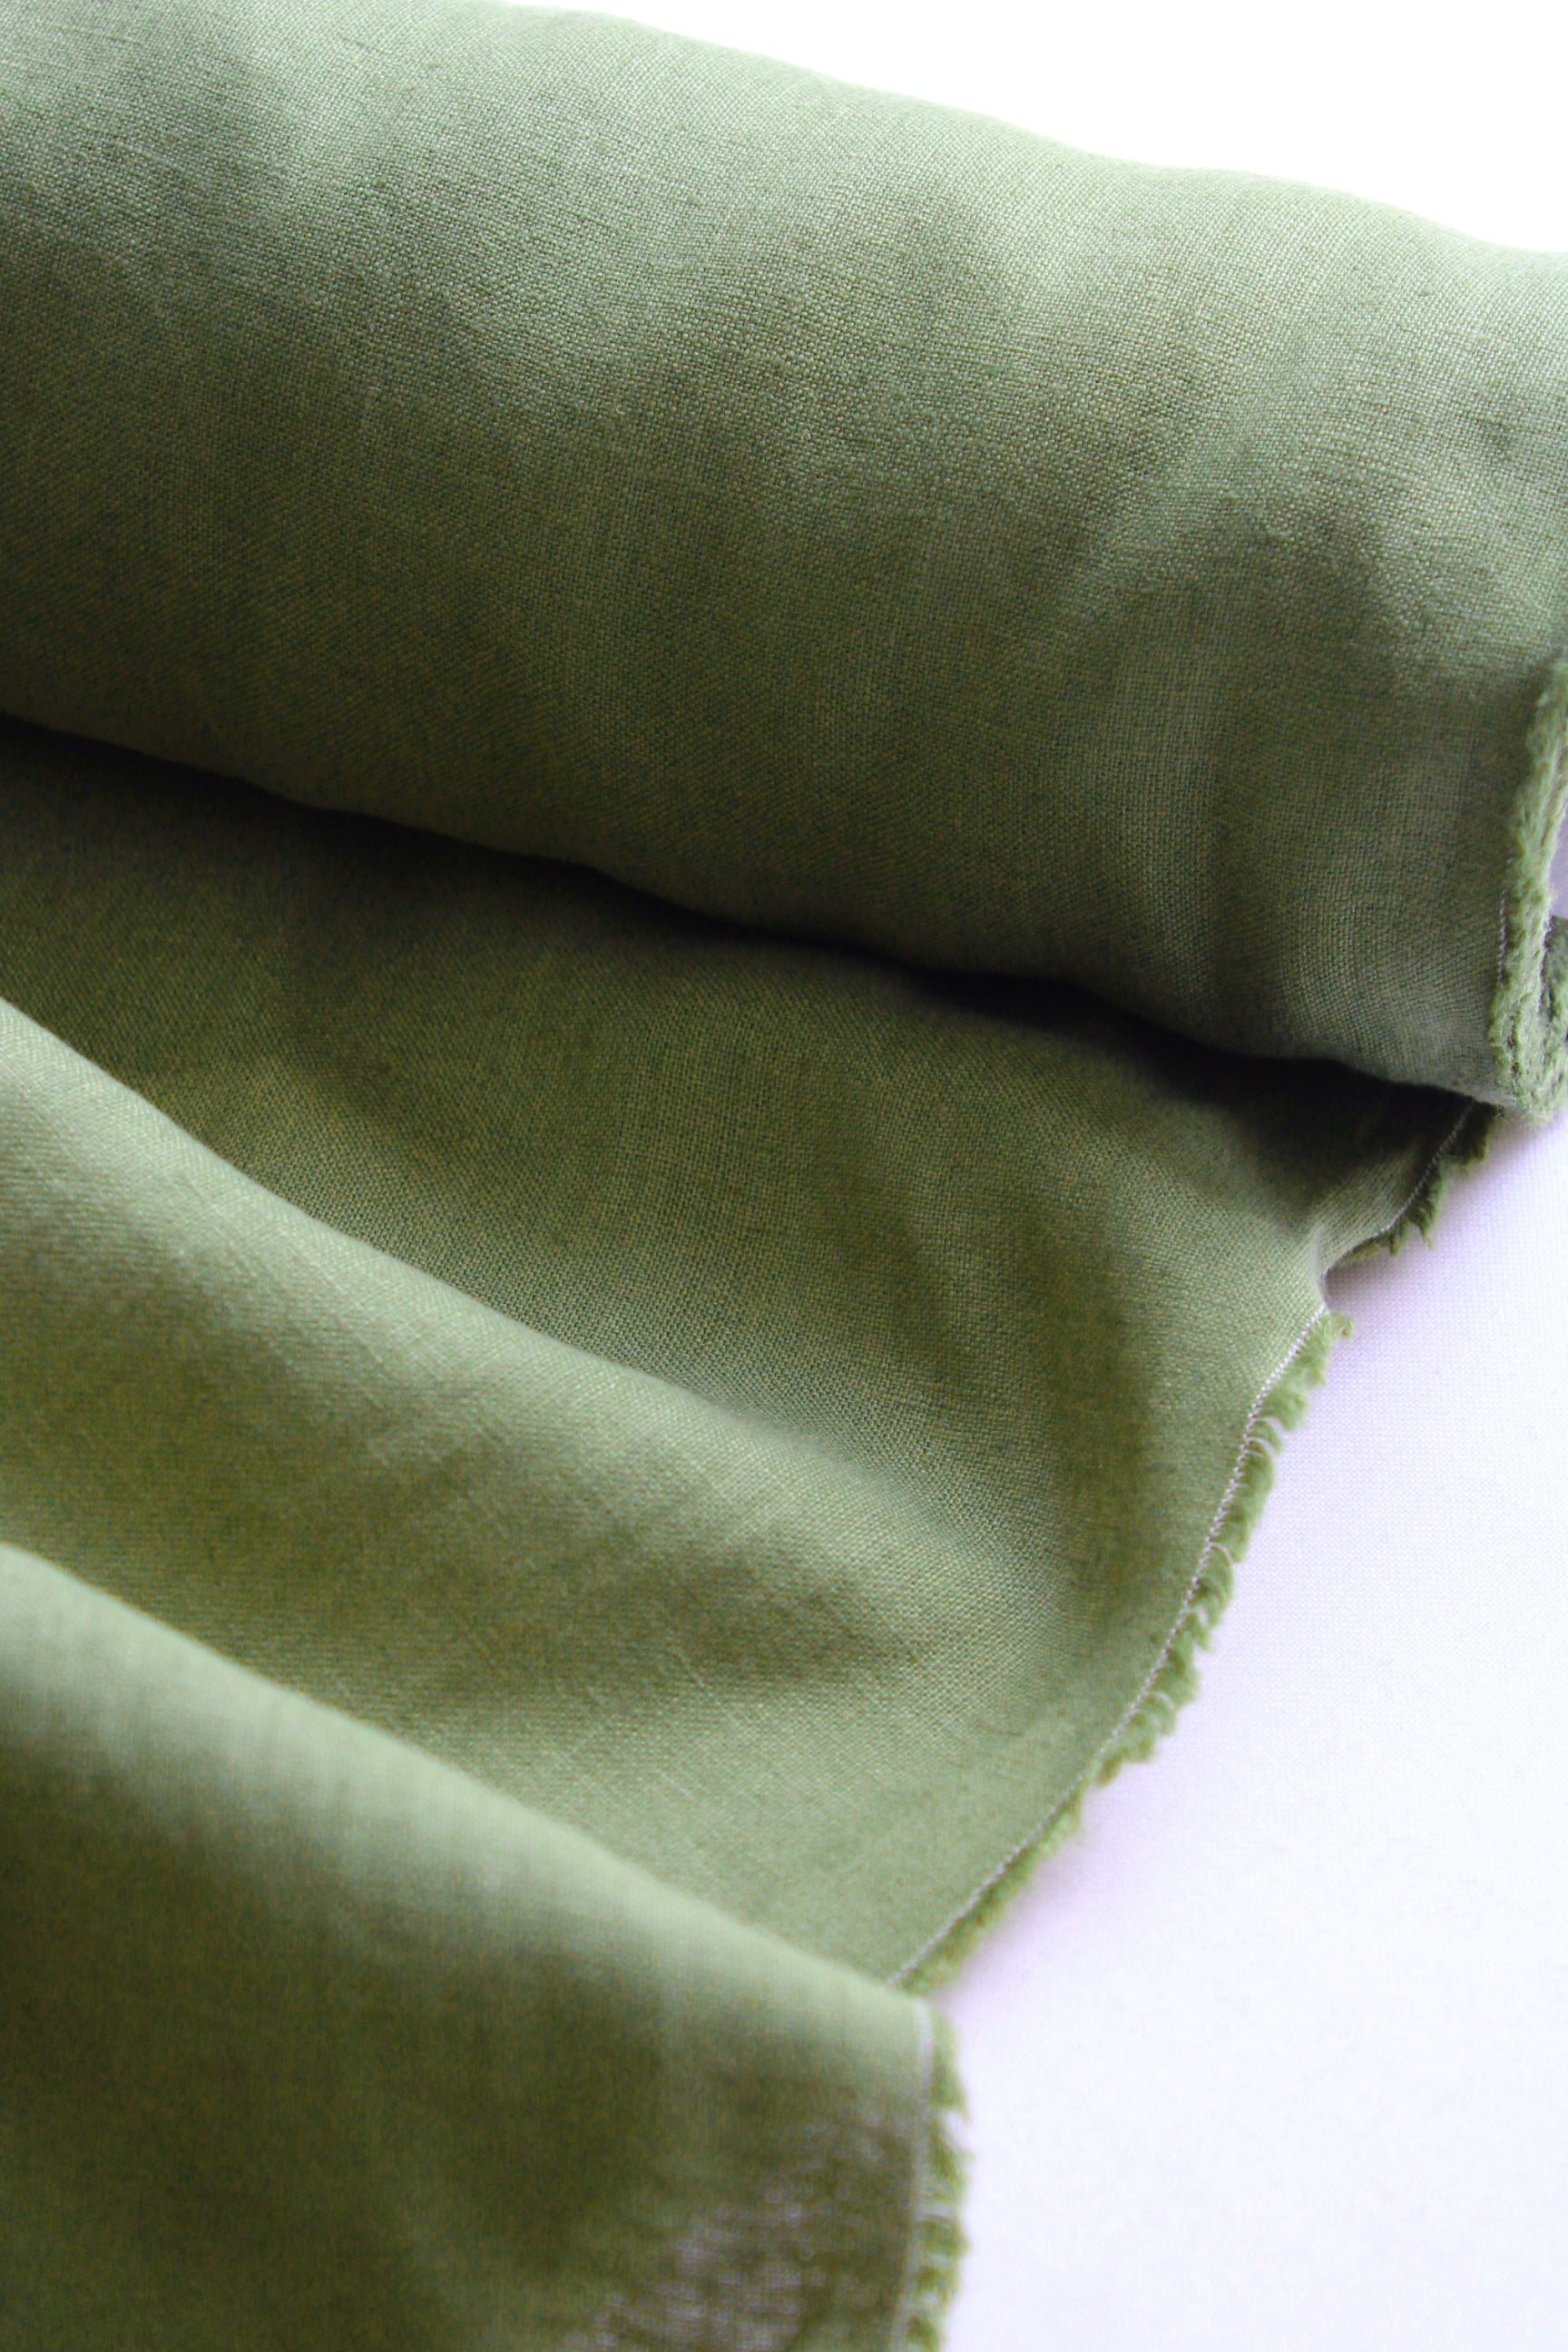 Siena Khaki Linen Fabric - AVLEN